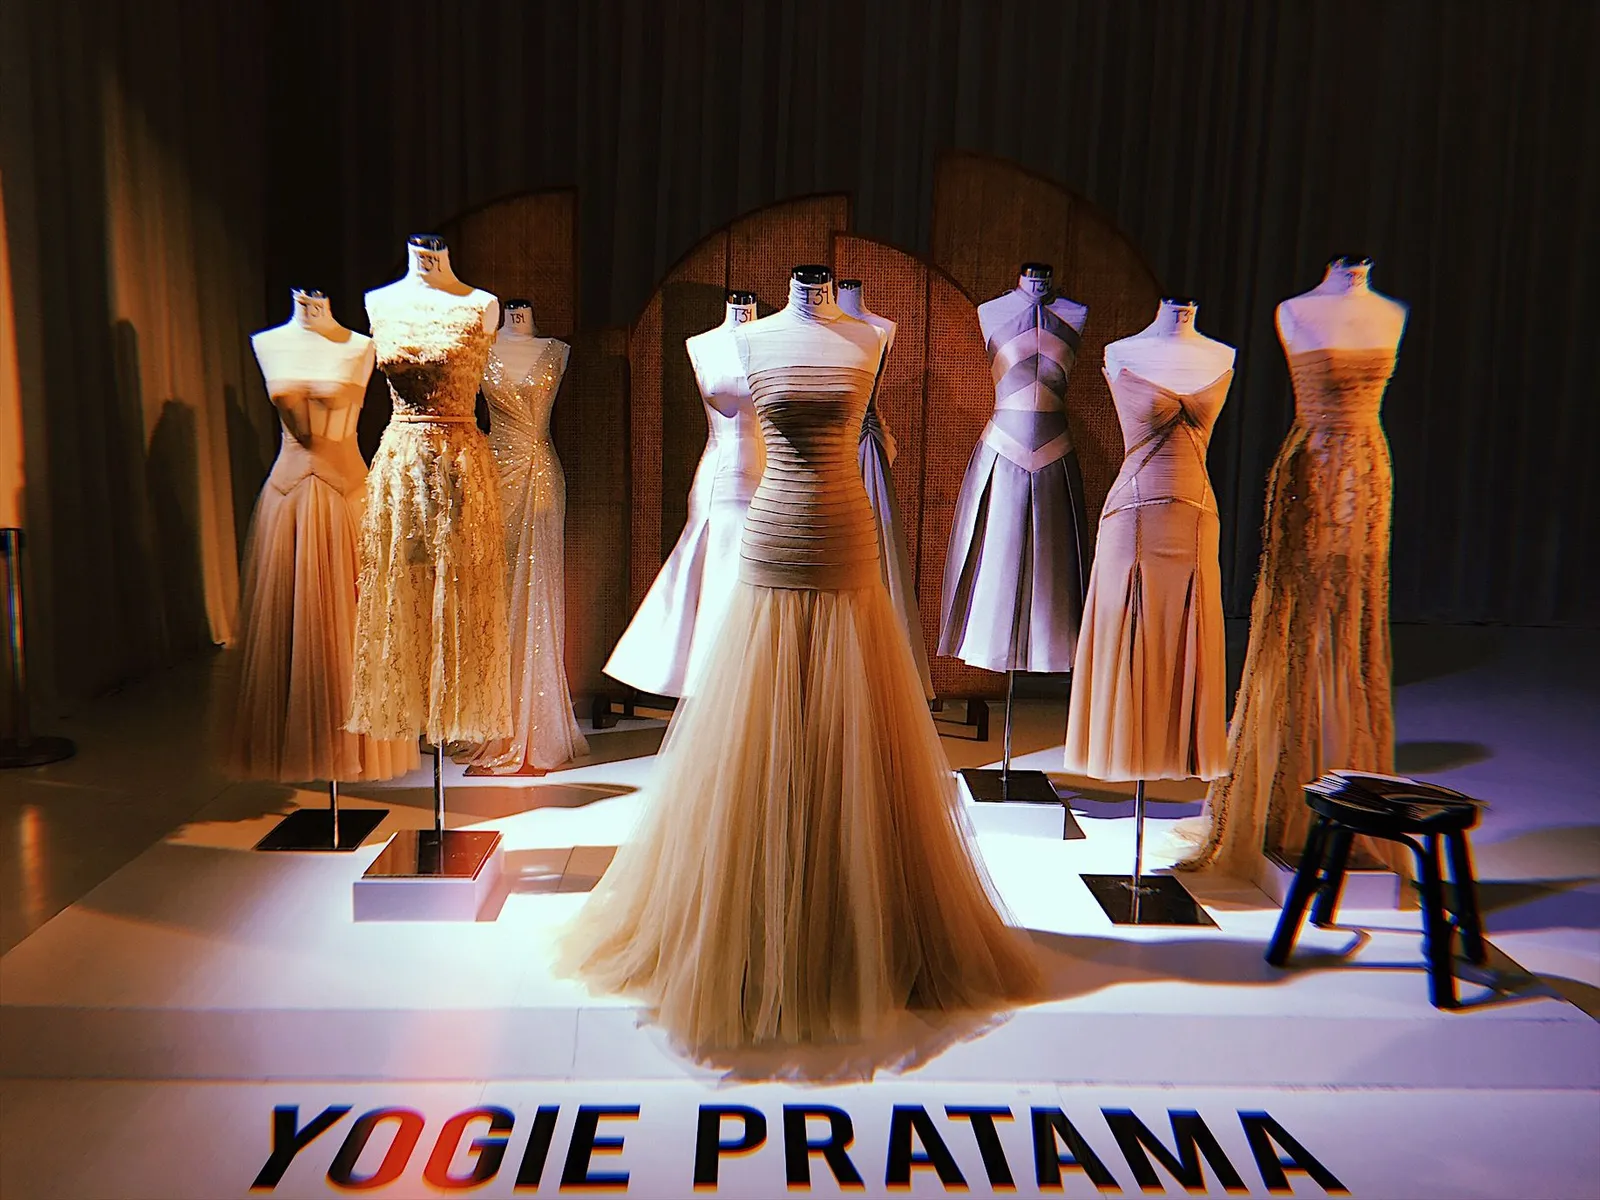 Pameran Fashion IPMI Trend Show 2019: 5 Desainer dalam 1 Konsep